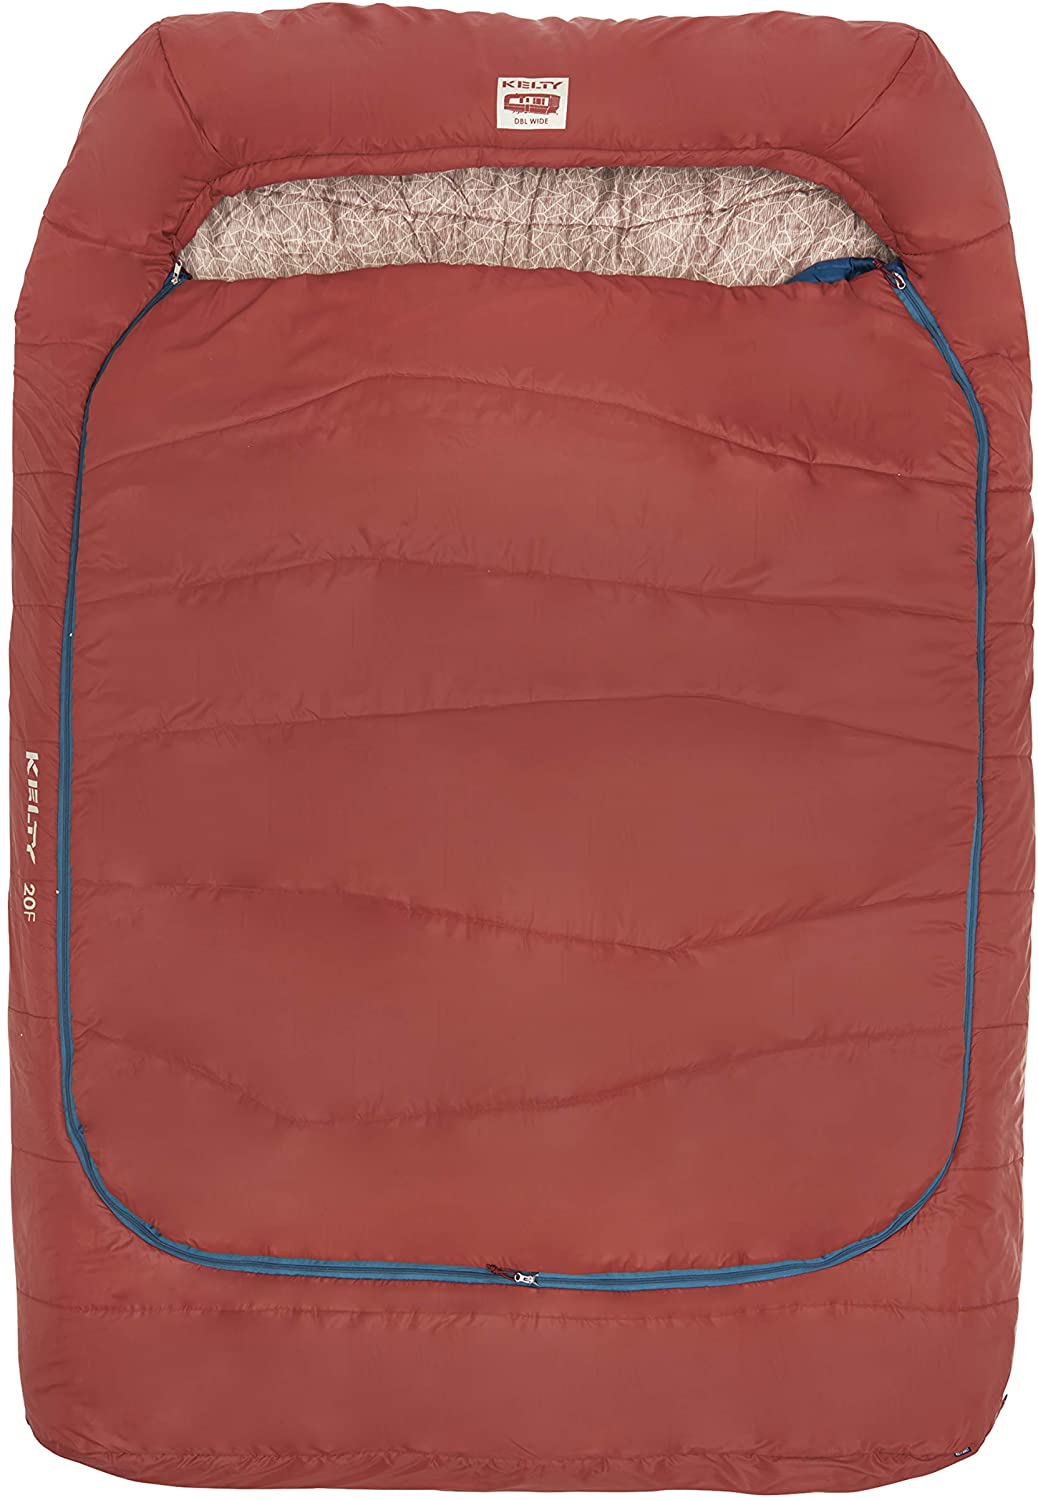 Kelty Tru Comfort Doublewide camping sleeping bag